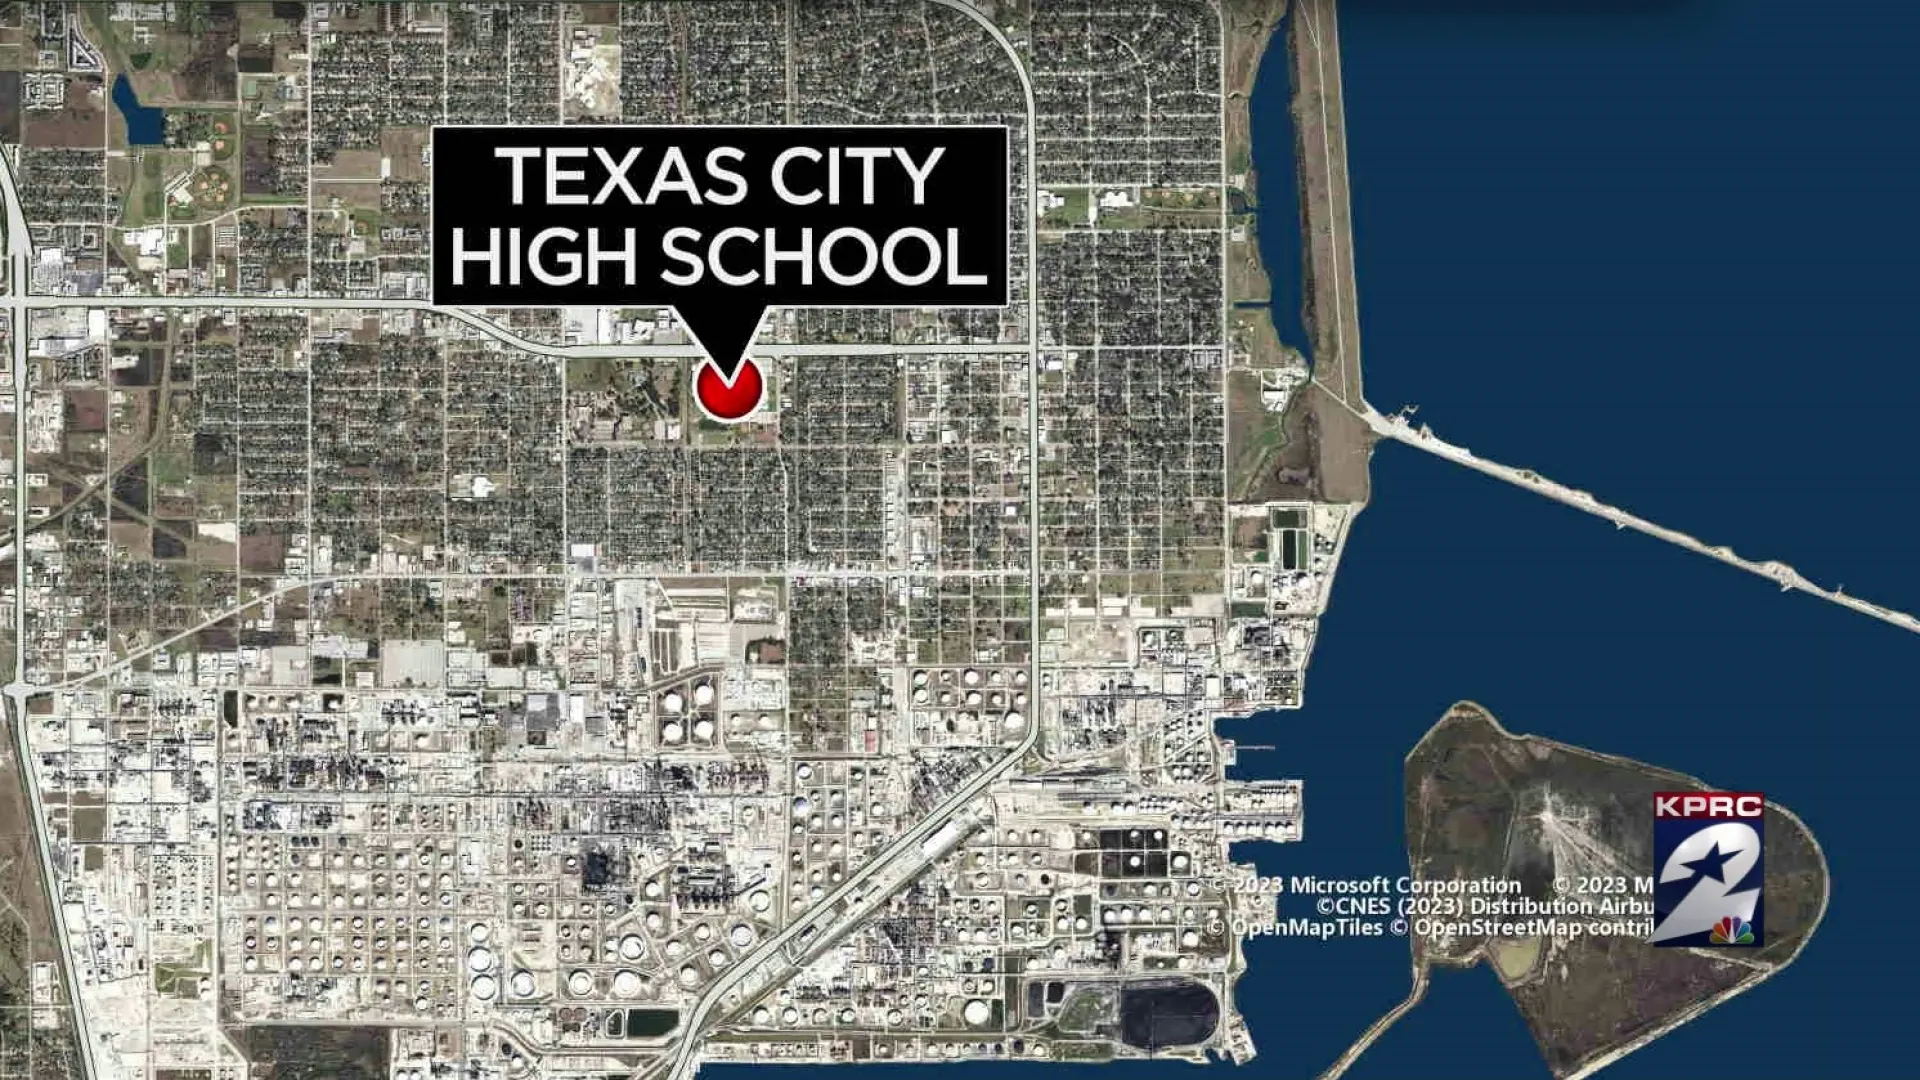 Texas City High School student found with loaded gun, taken into custody